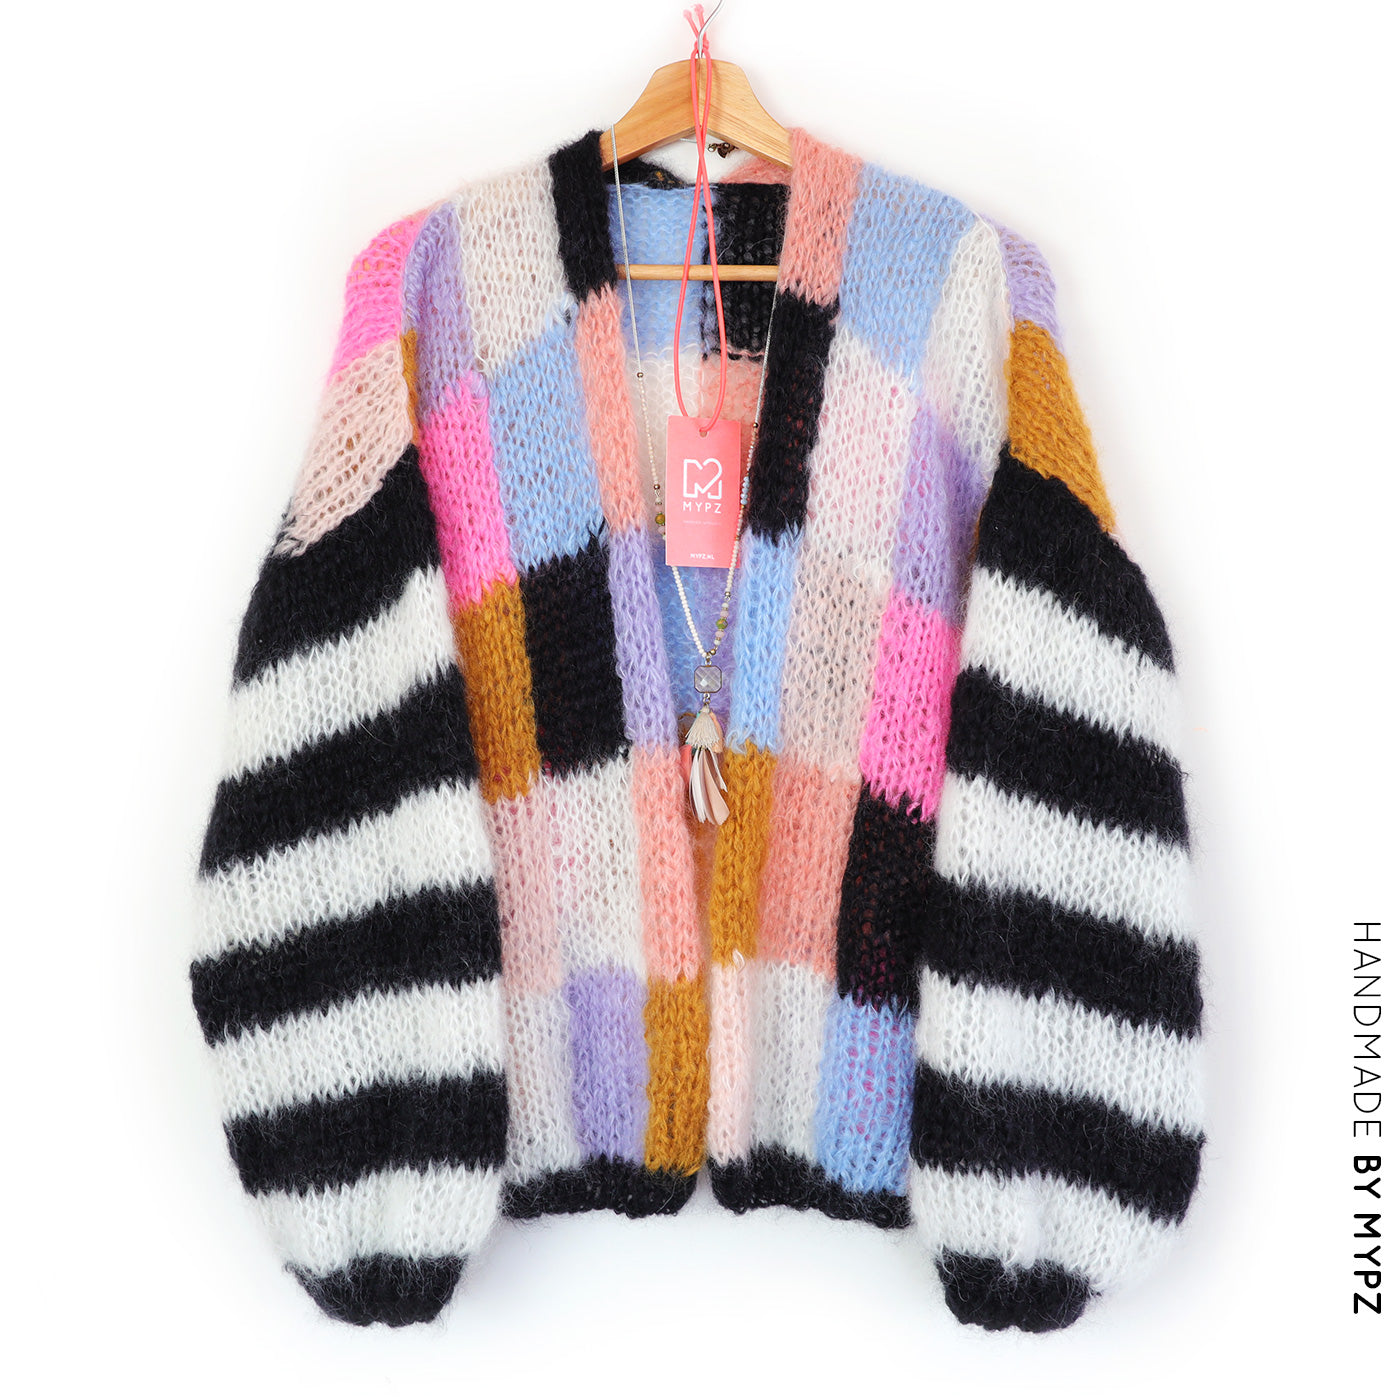 Knitting kit – MYPZ Light Mohair Cardigan Fuzzy No10 (ENG-NL-DE)